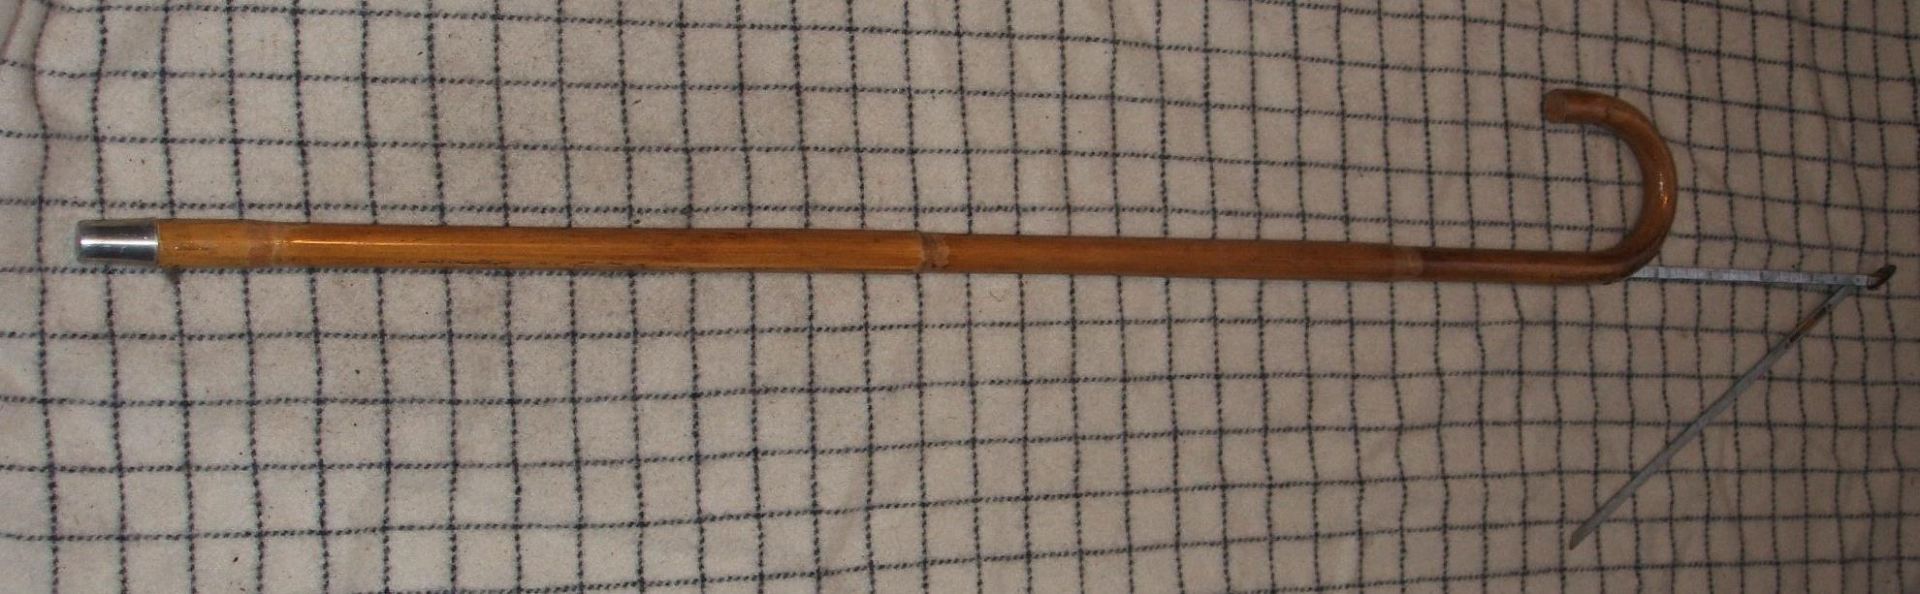 Cane measuring stick